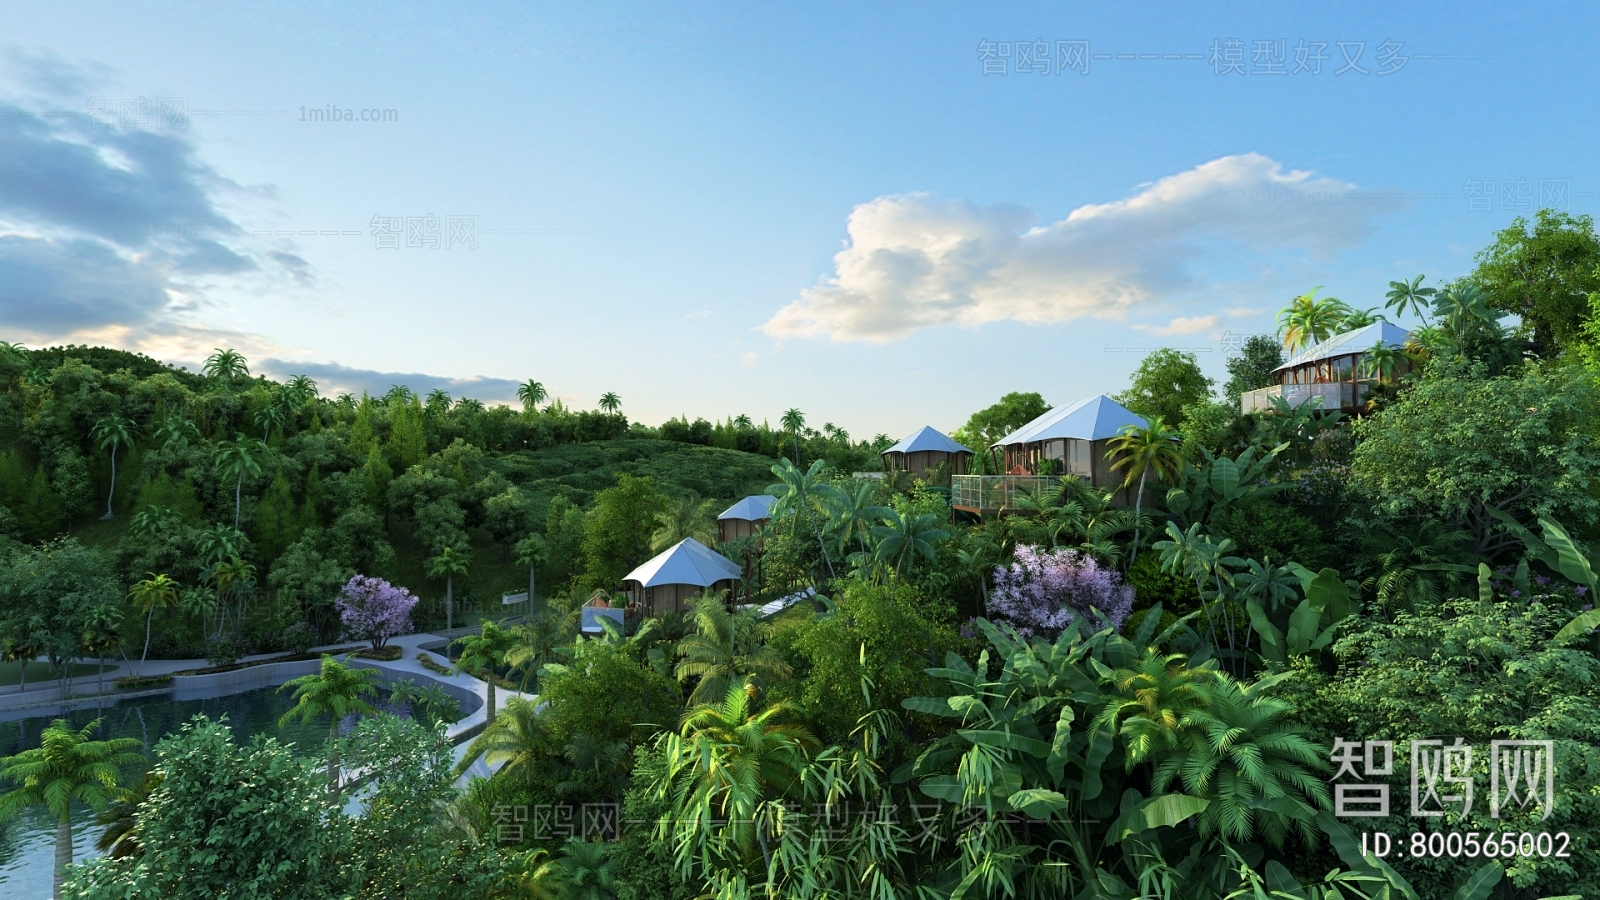 Southeast Asian Style Garden Landscape